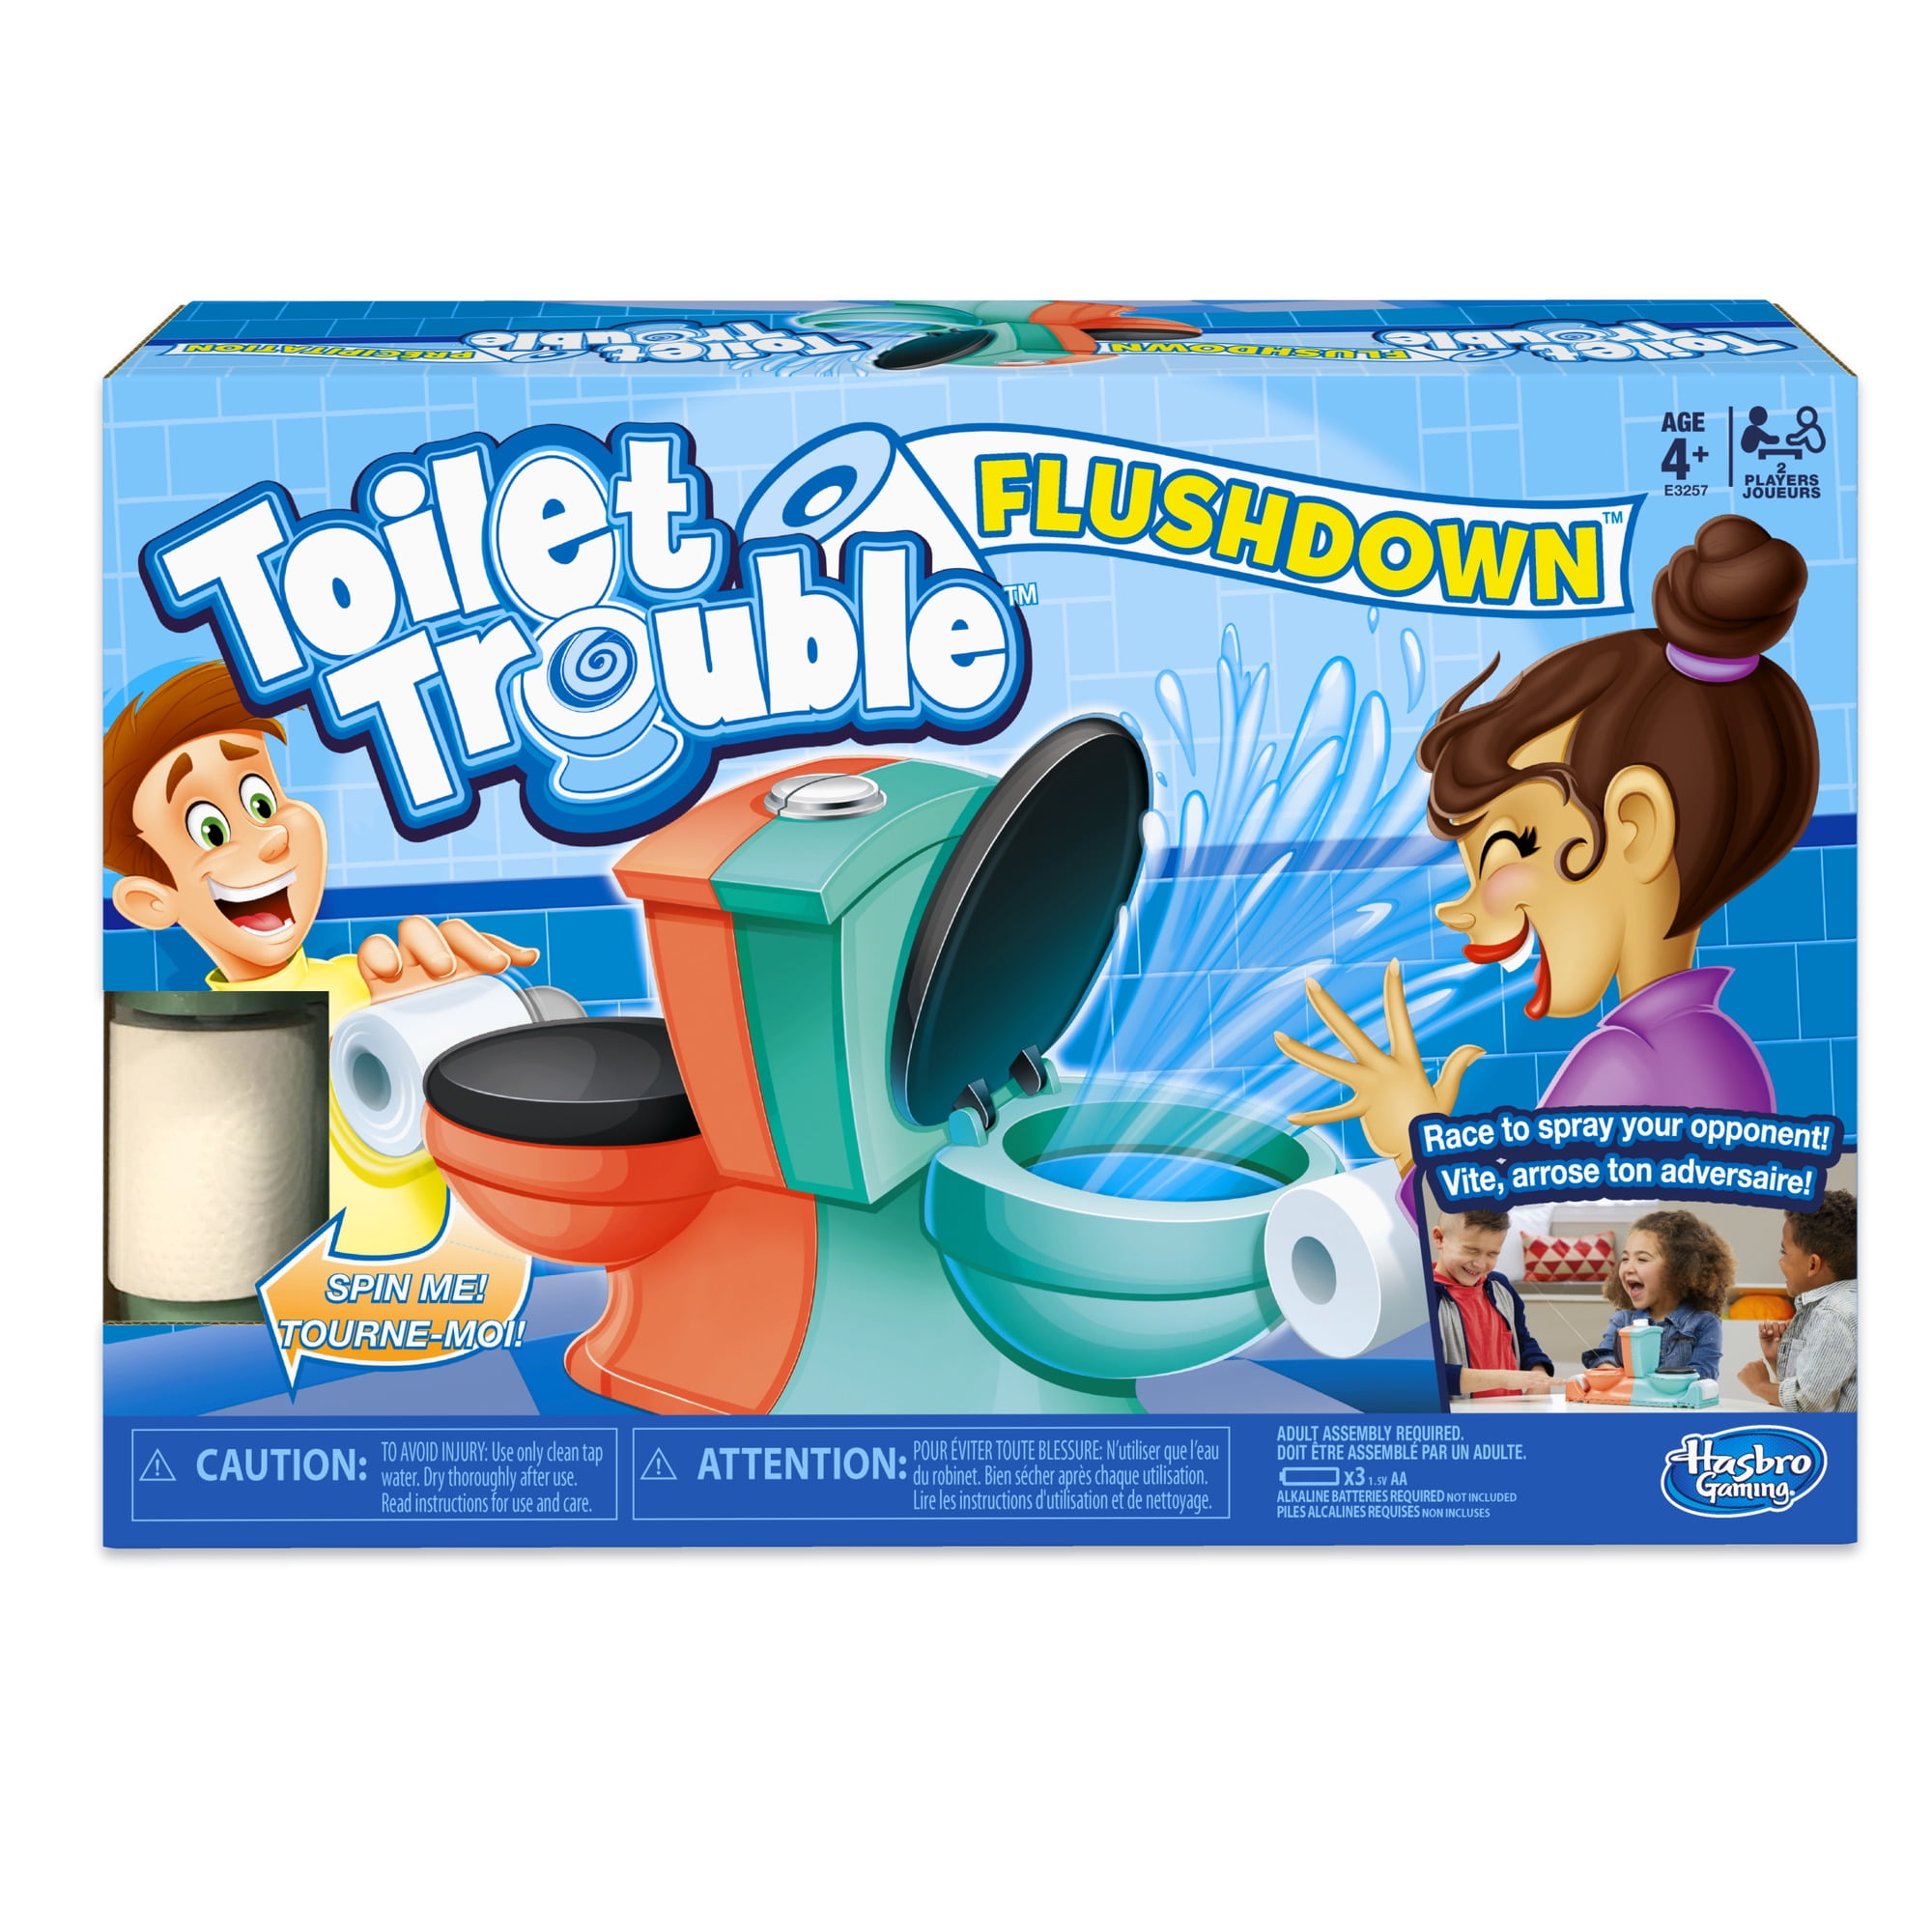 Toilet Trouble Flushdown Kids Game Water Spraying Fun Hasbro Gaming G9 for sale online 